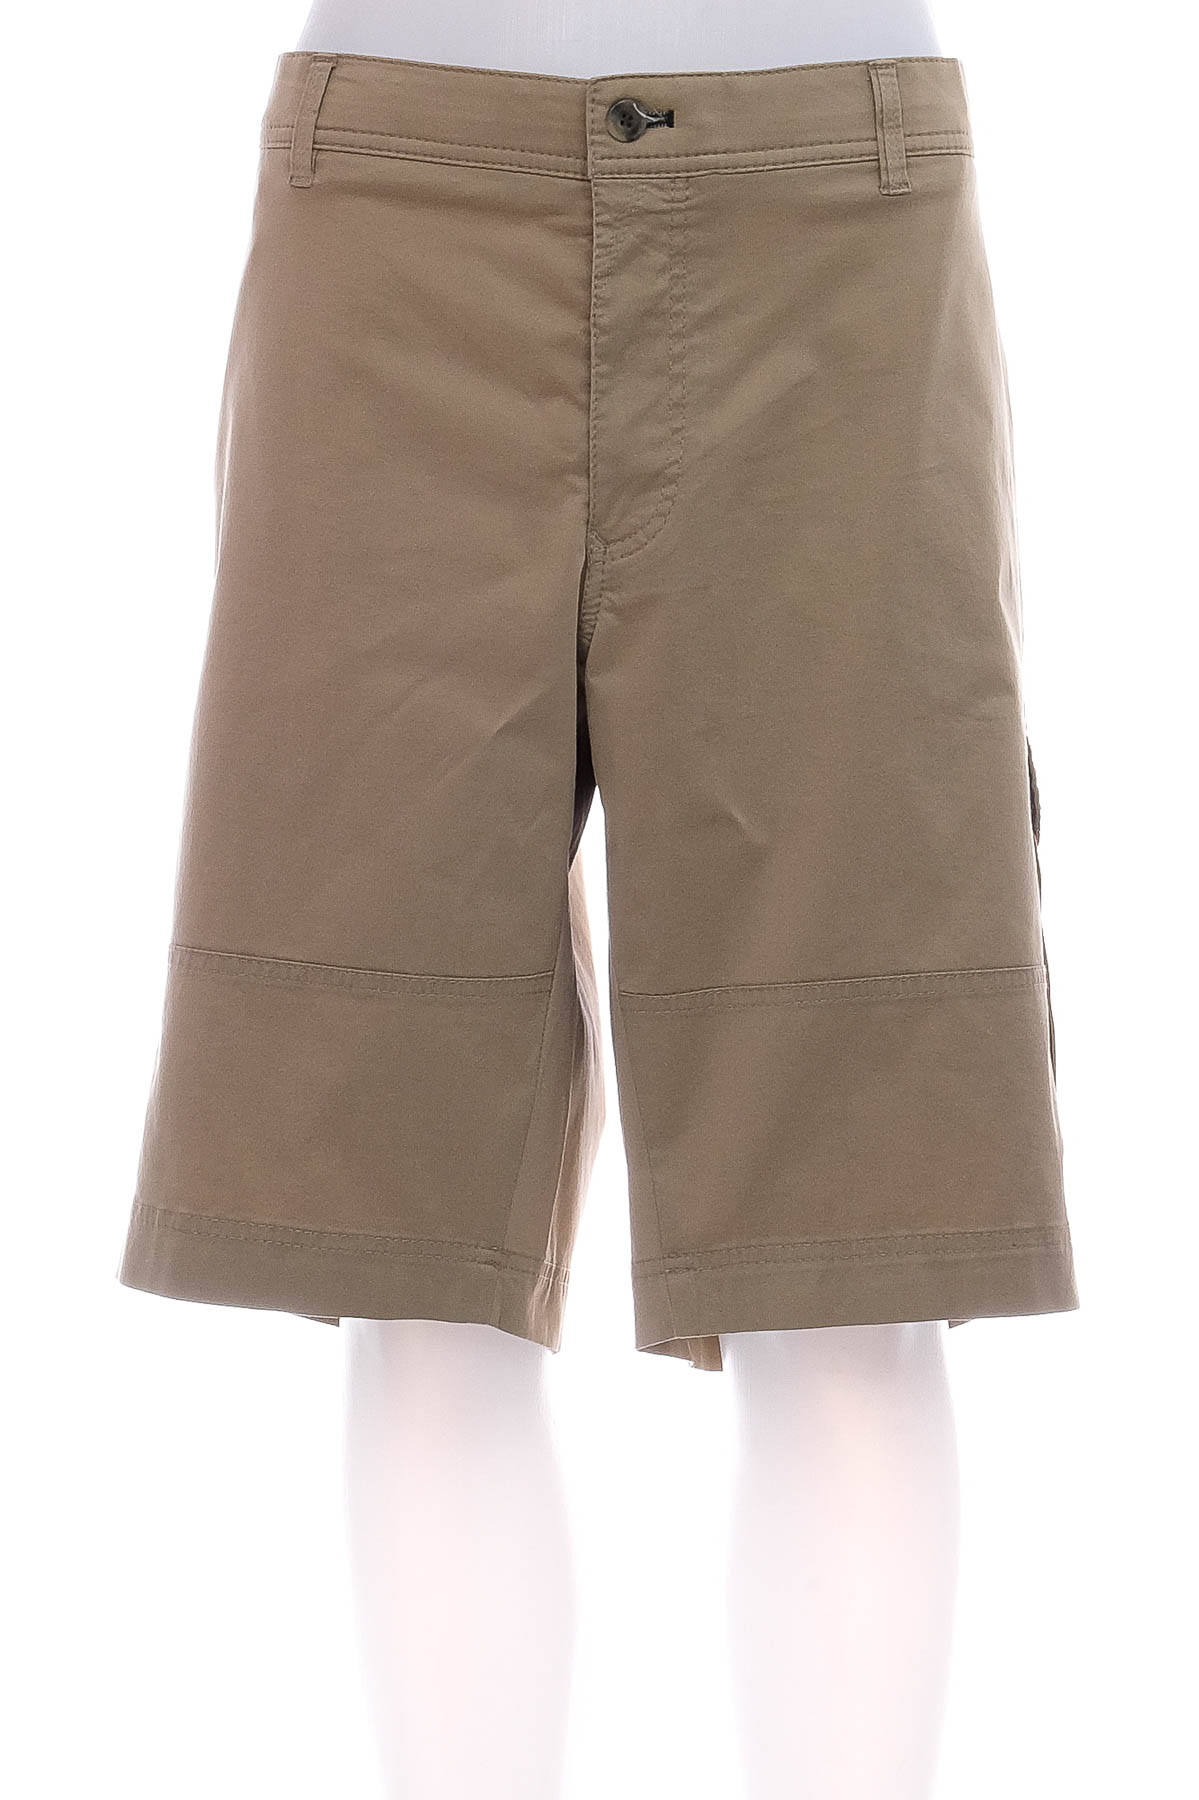 Men's shorts - EUREX BY BRAX - 0